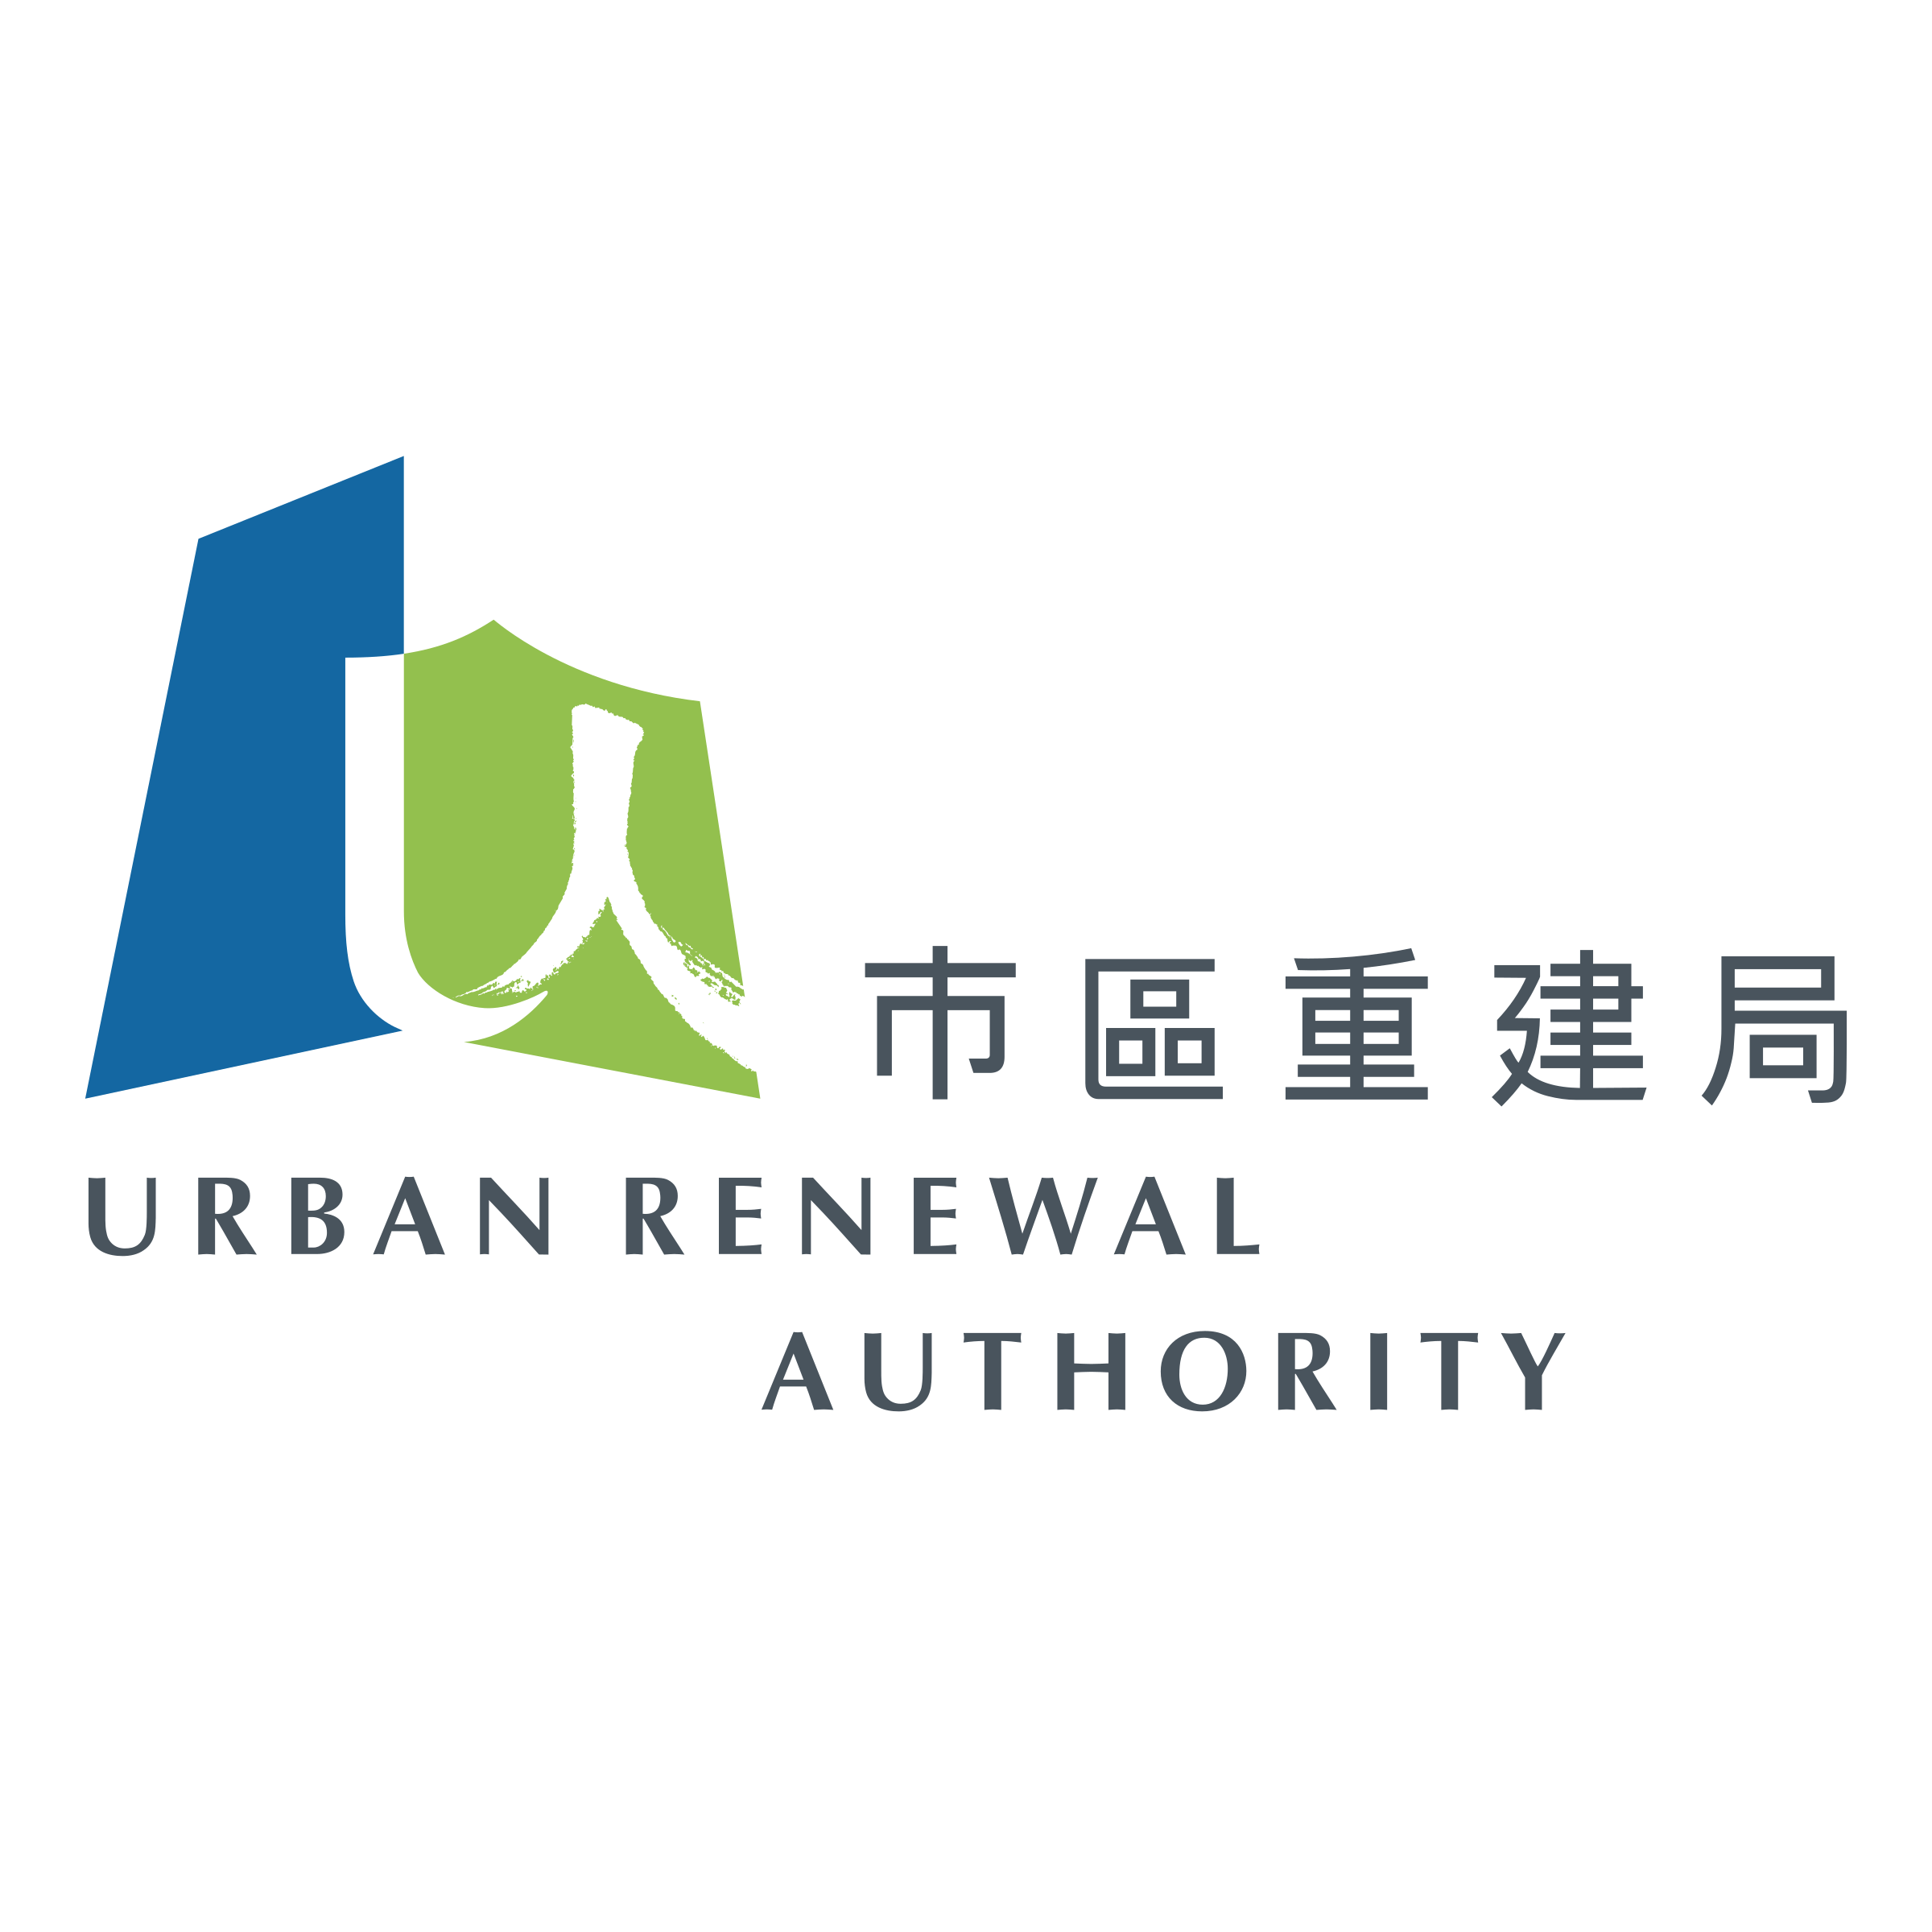 Renewal Logo - Urban Renewal Authority Logo PNG Transparent & SVG Vector - Freebie ...